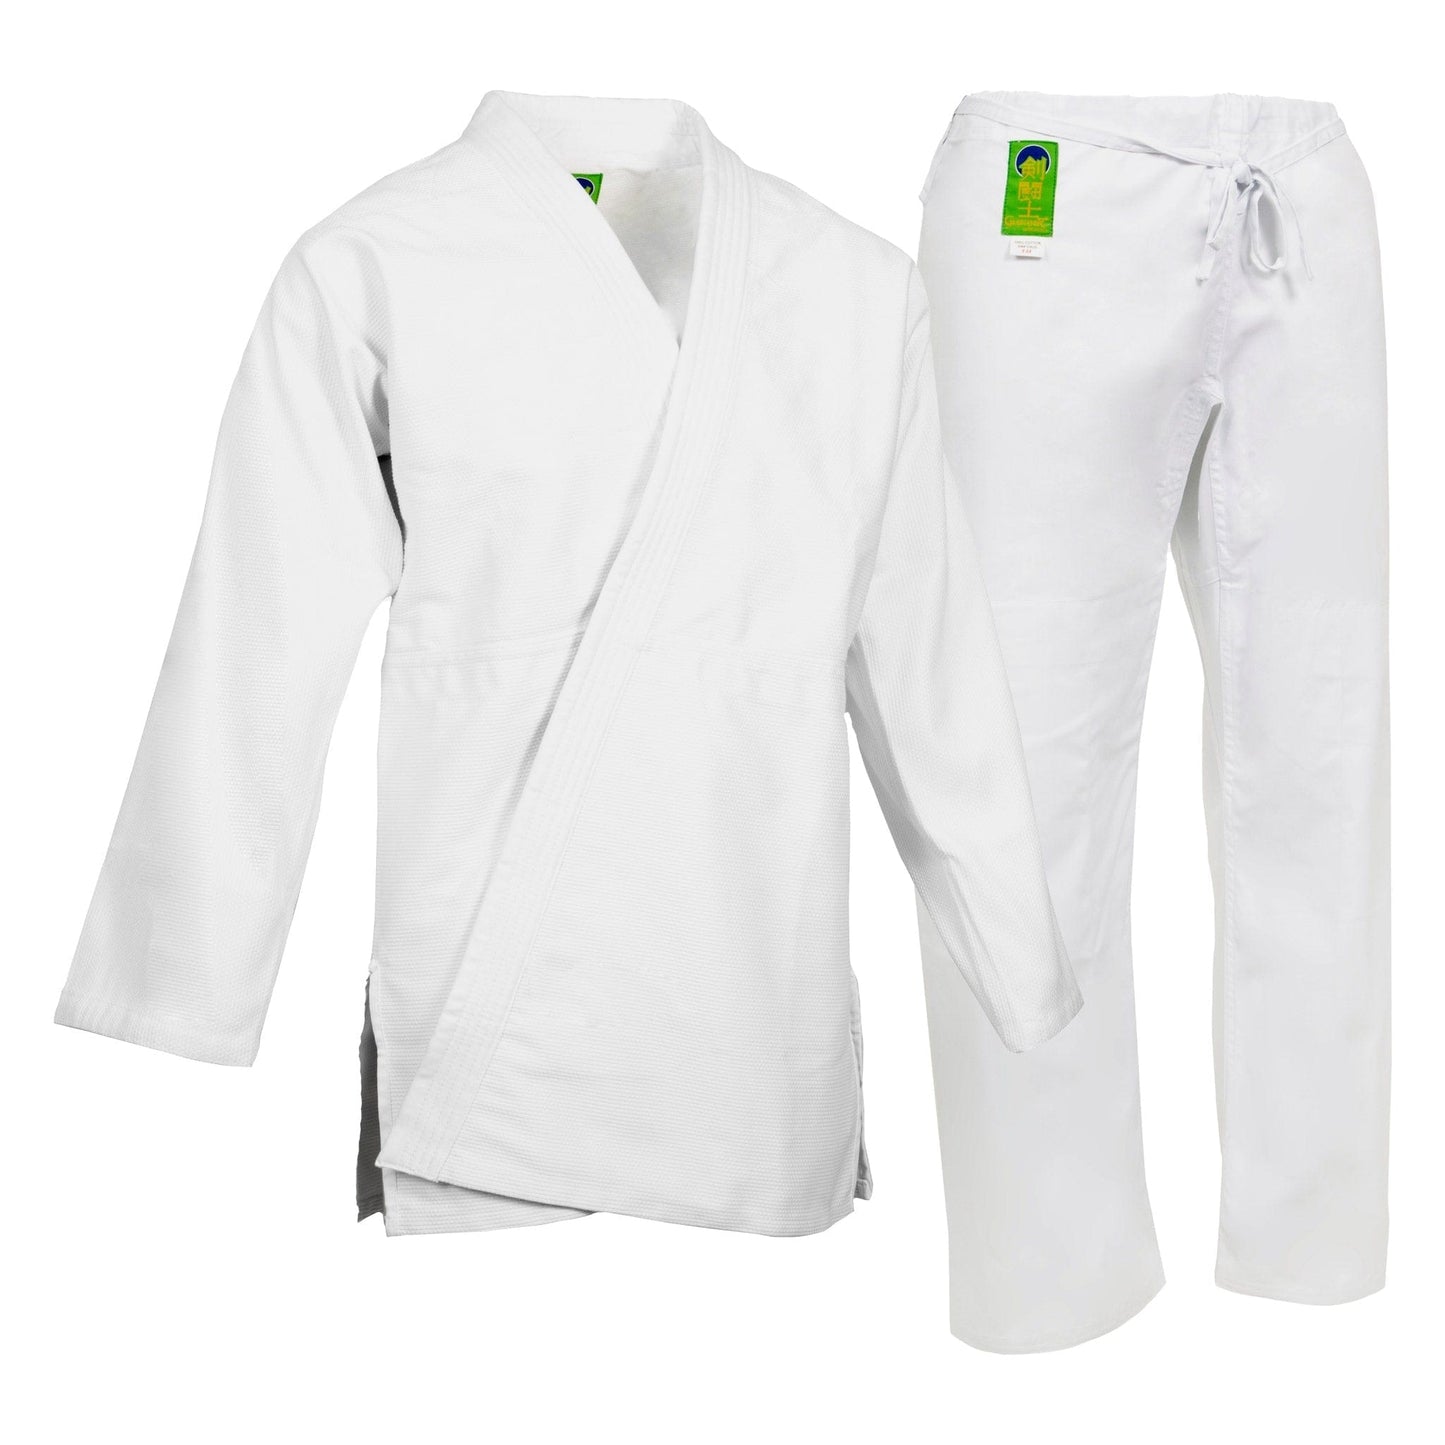 EclipseMartialArtsSupplies sporting goods White / K00 ProForce Gladiator Pearl Jiu-Jitsu Uniform